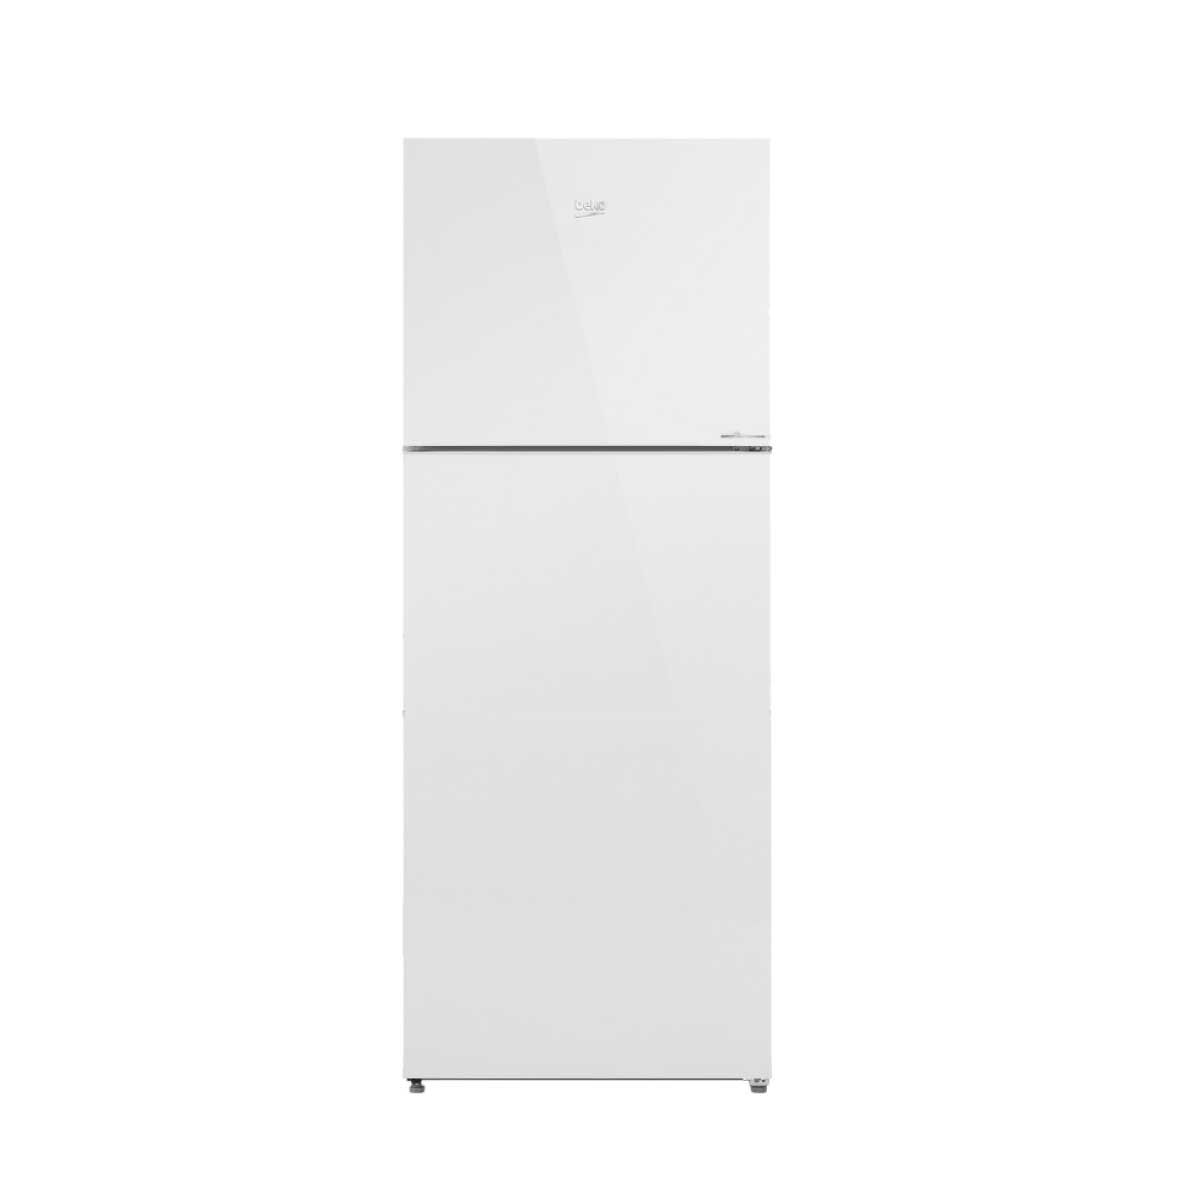 BEKO ตู้เย็น 2 ประตู 12Q Harvest Fresh กระจกขาว รุ่นRDNT371I40VHFSGW